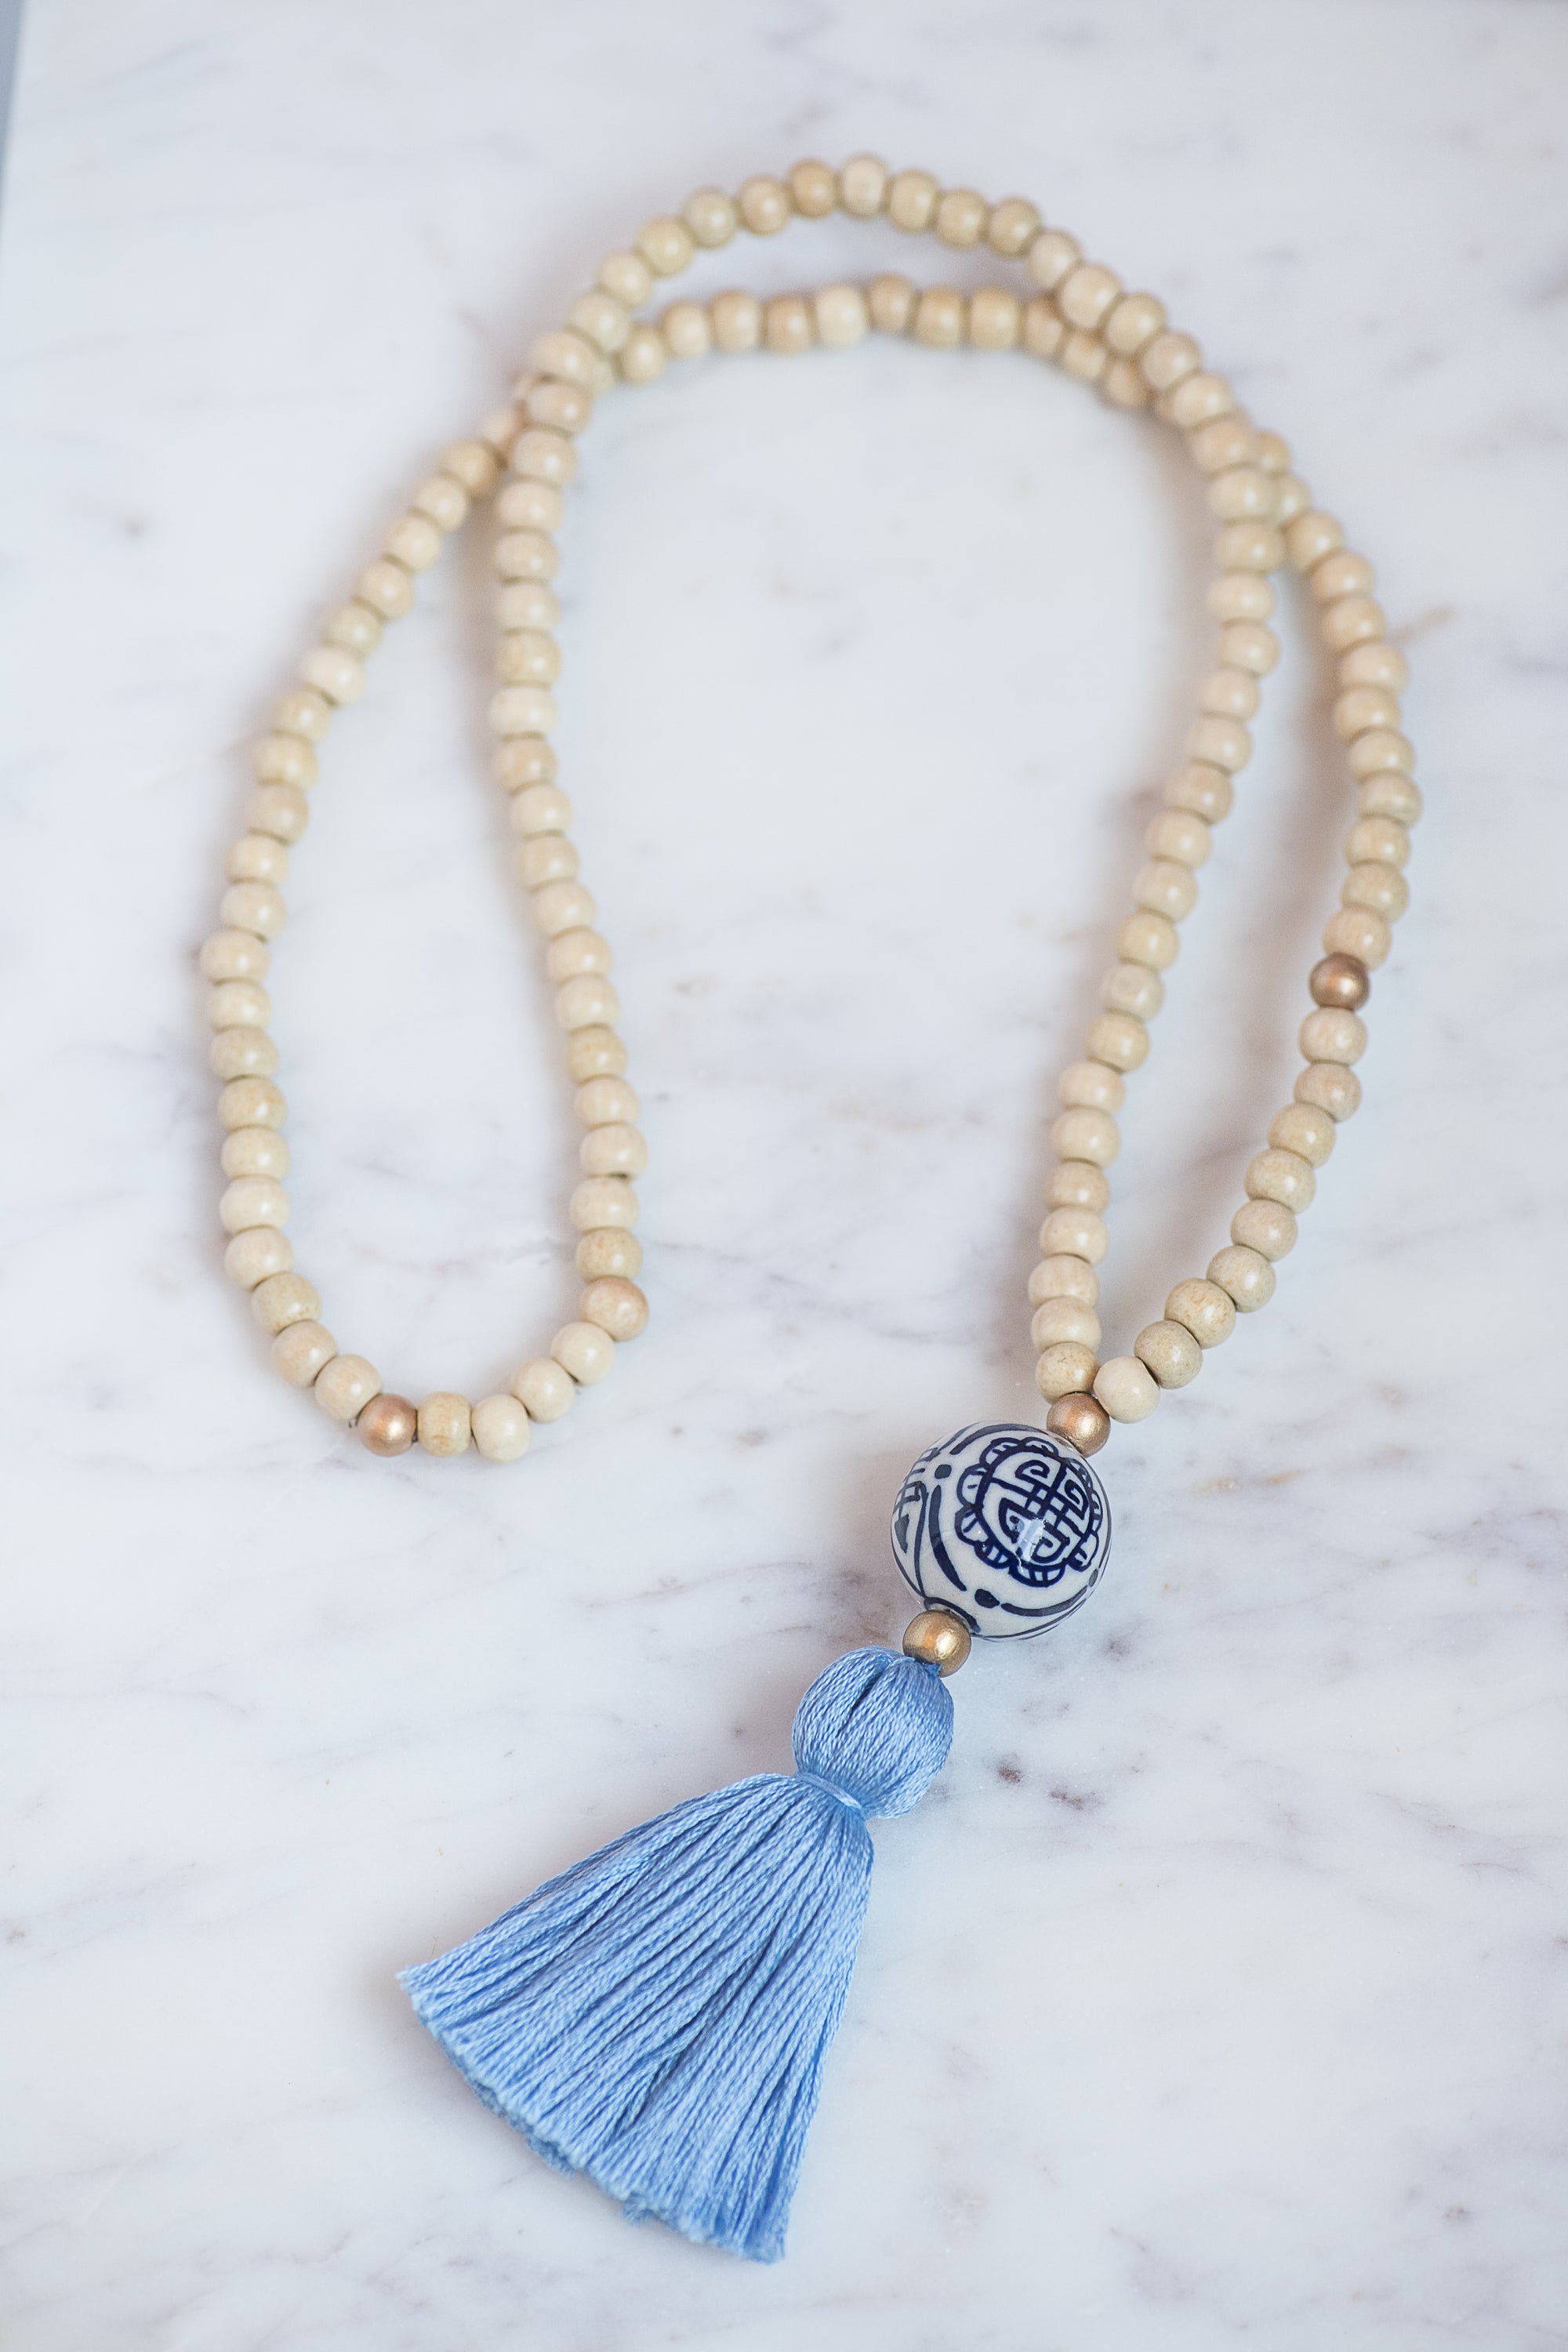 The Chalmers Tassel Necklace in Cornflower Blue